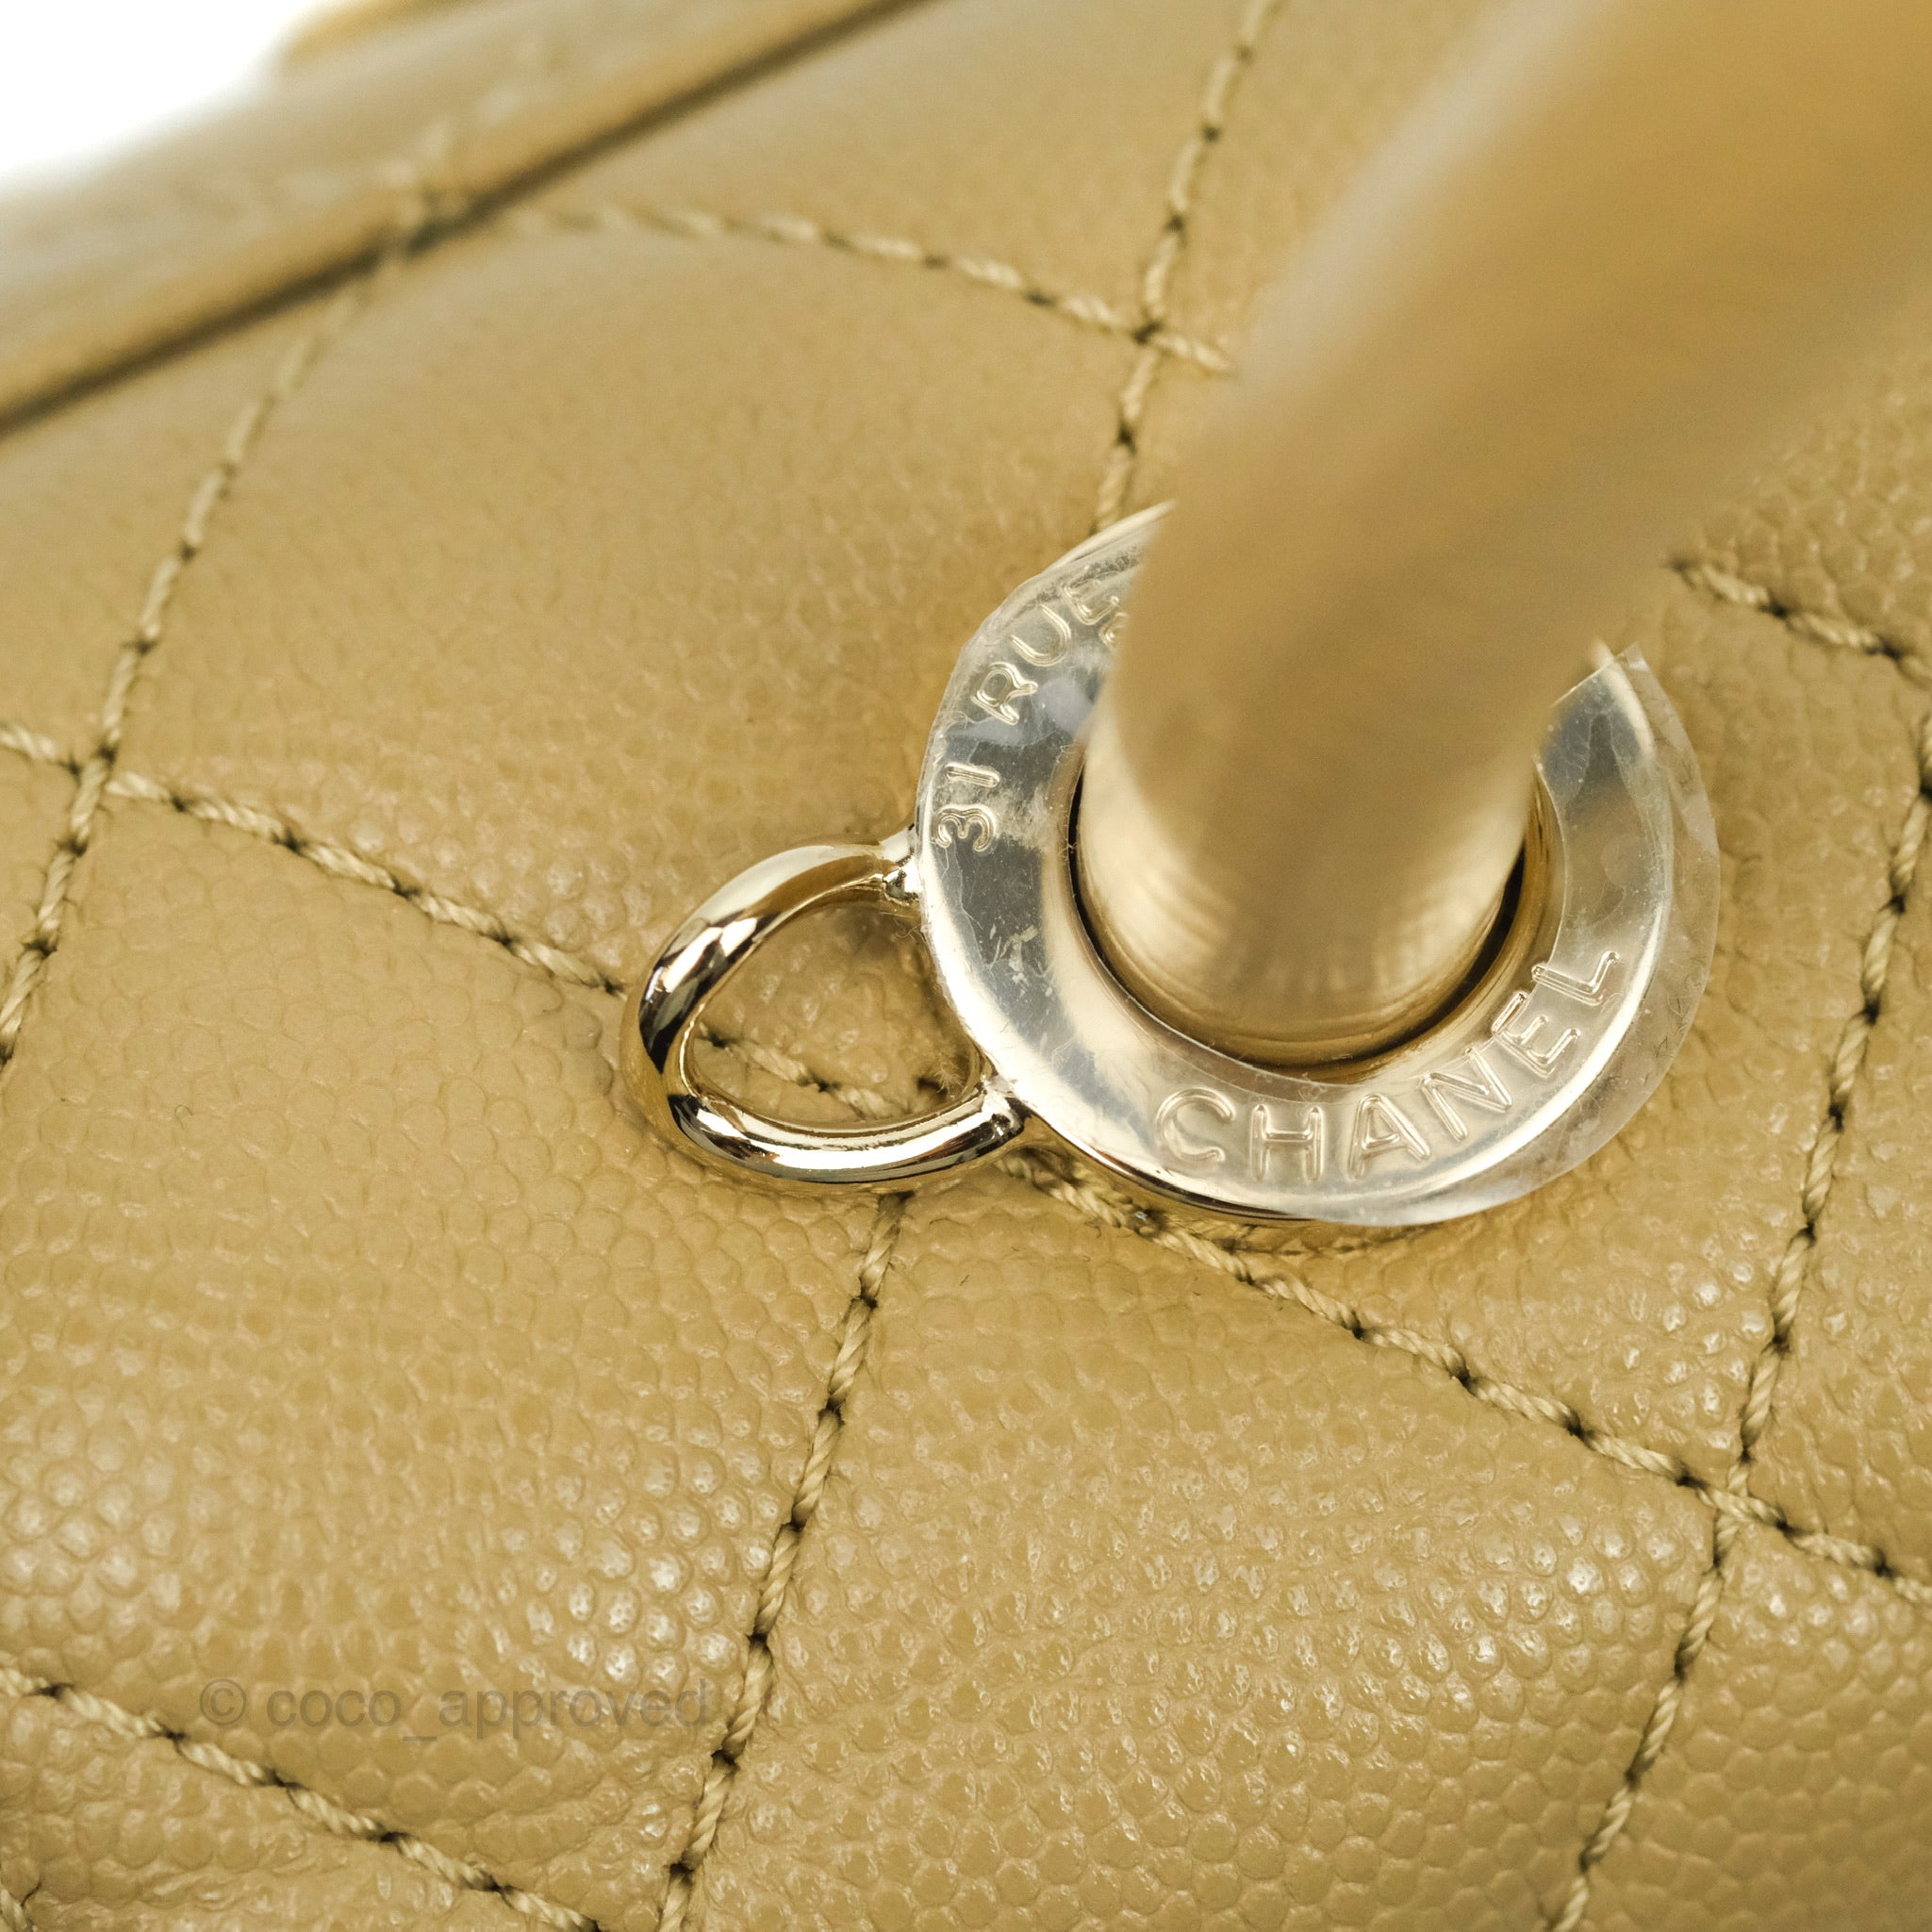 Chanel Small Flap Bag Dark Beige Caviar Gold Hardware 22K – Coco